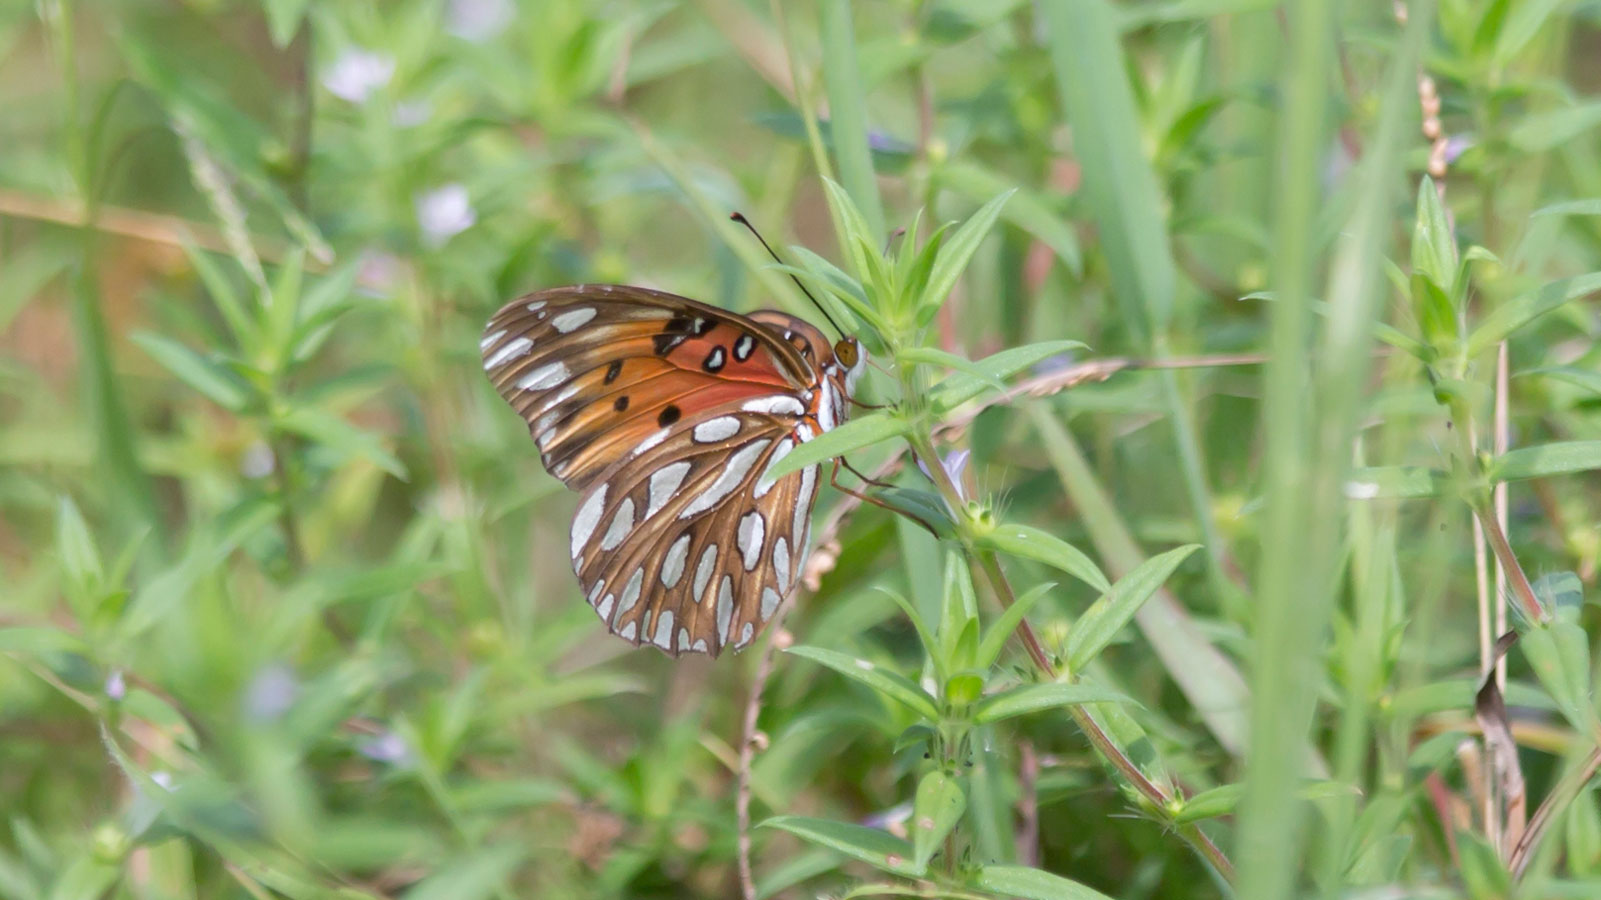 Gulf fritillary butterfly drinking nectar from a flower